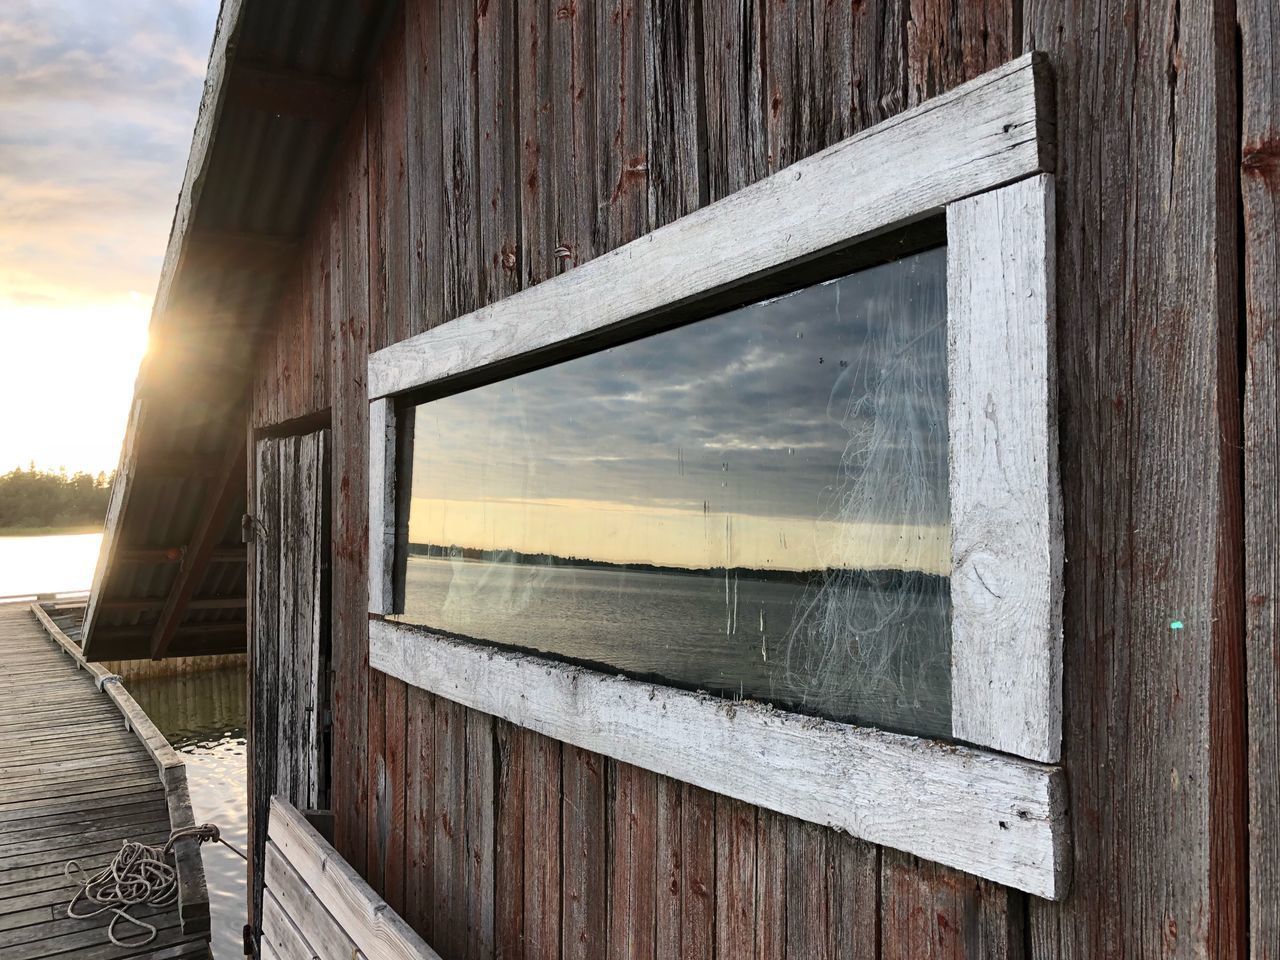 REFLECTION OF SKY ON WINDOW